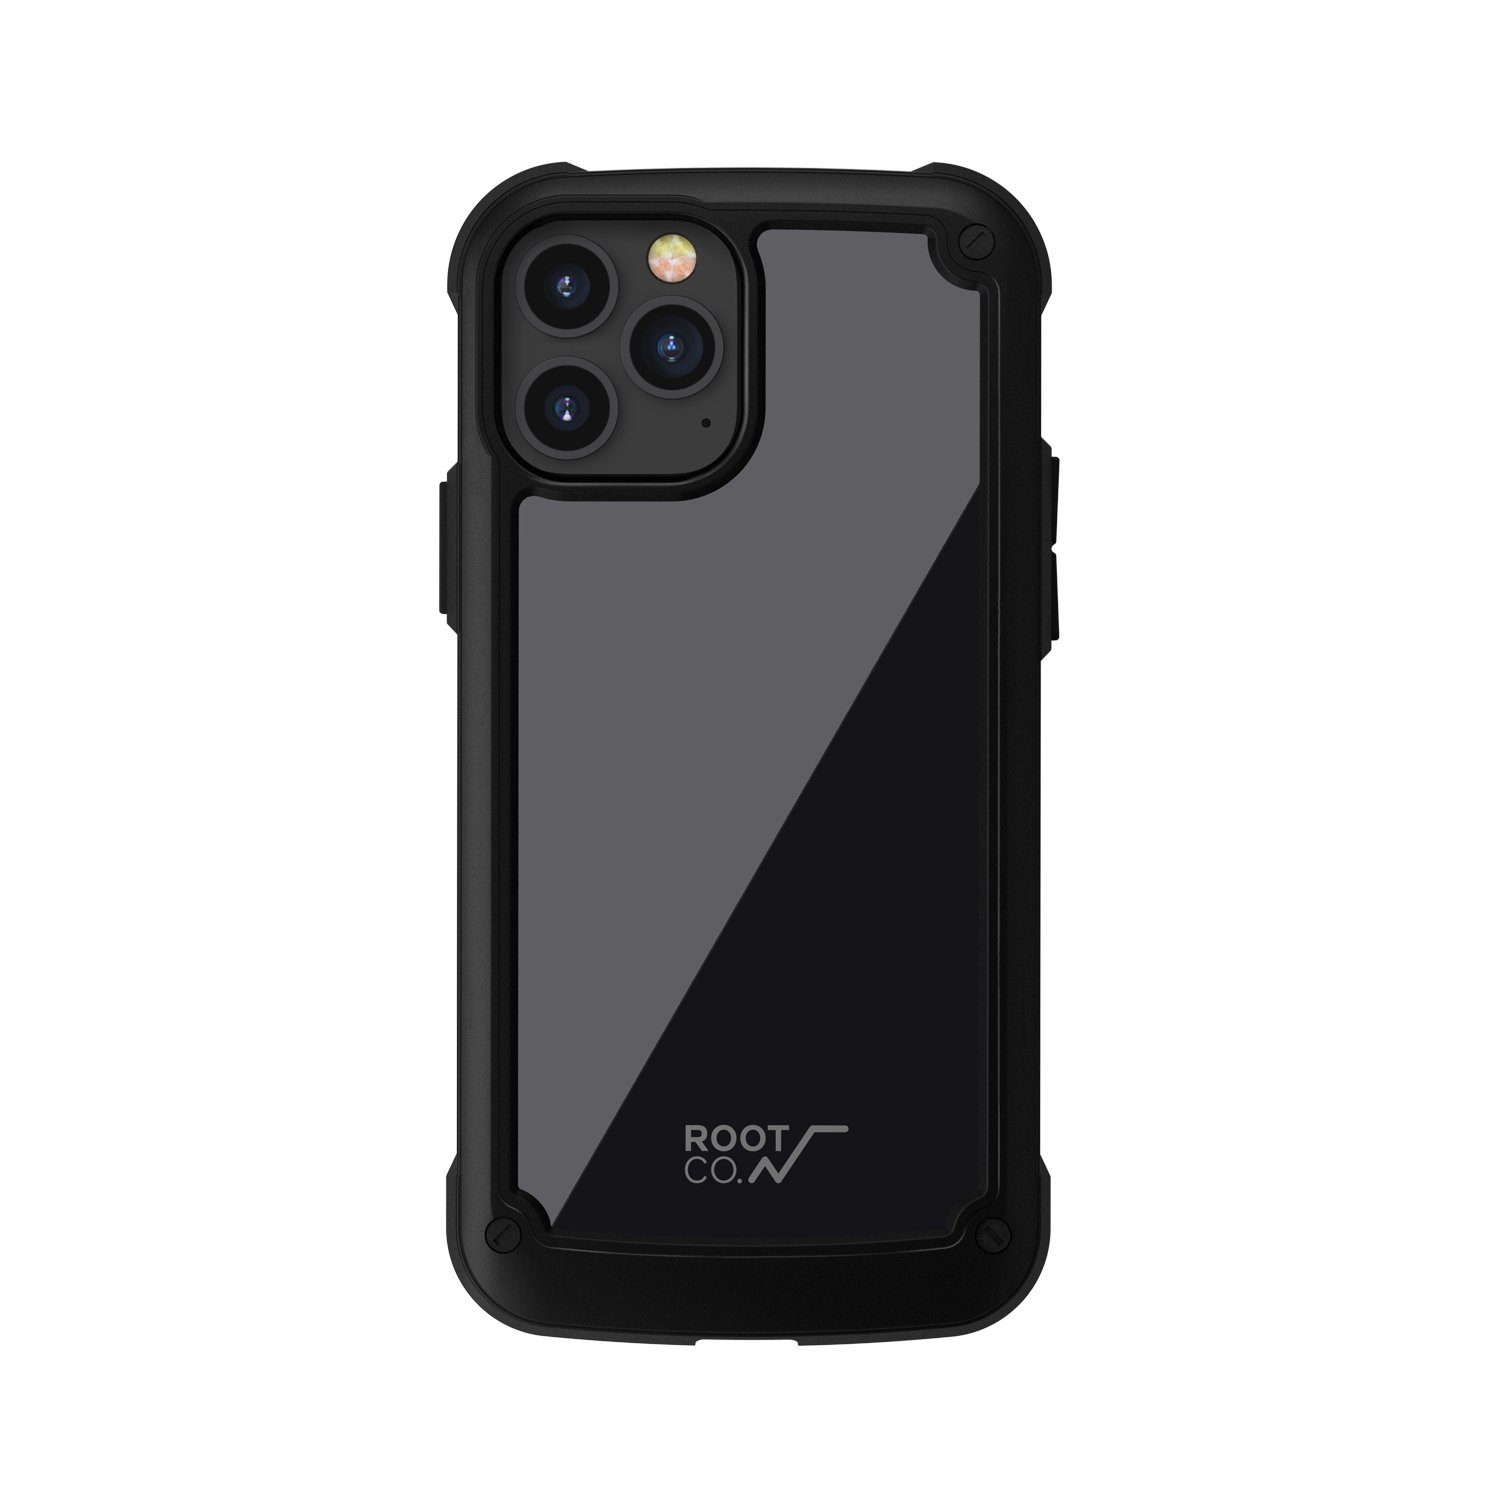 ROOT CO. Gravity Shock Resist Tough & Basic Case for iPhone 12/12 Pro 6.1"(2020), Black Default ROOT CO. 